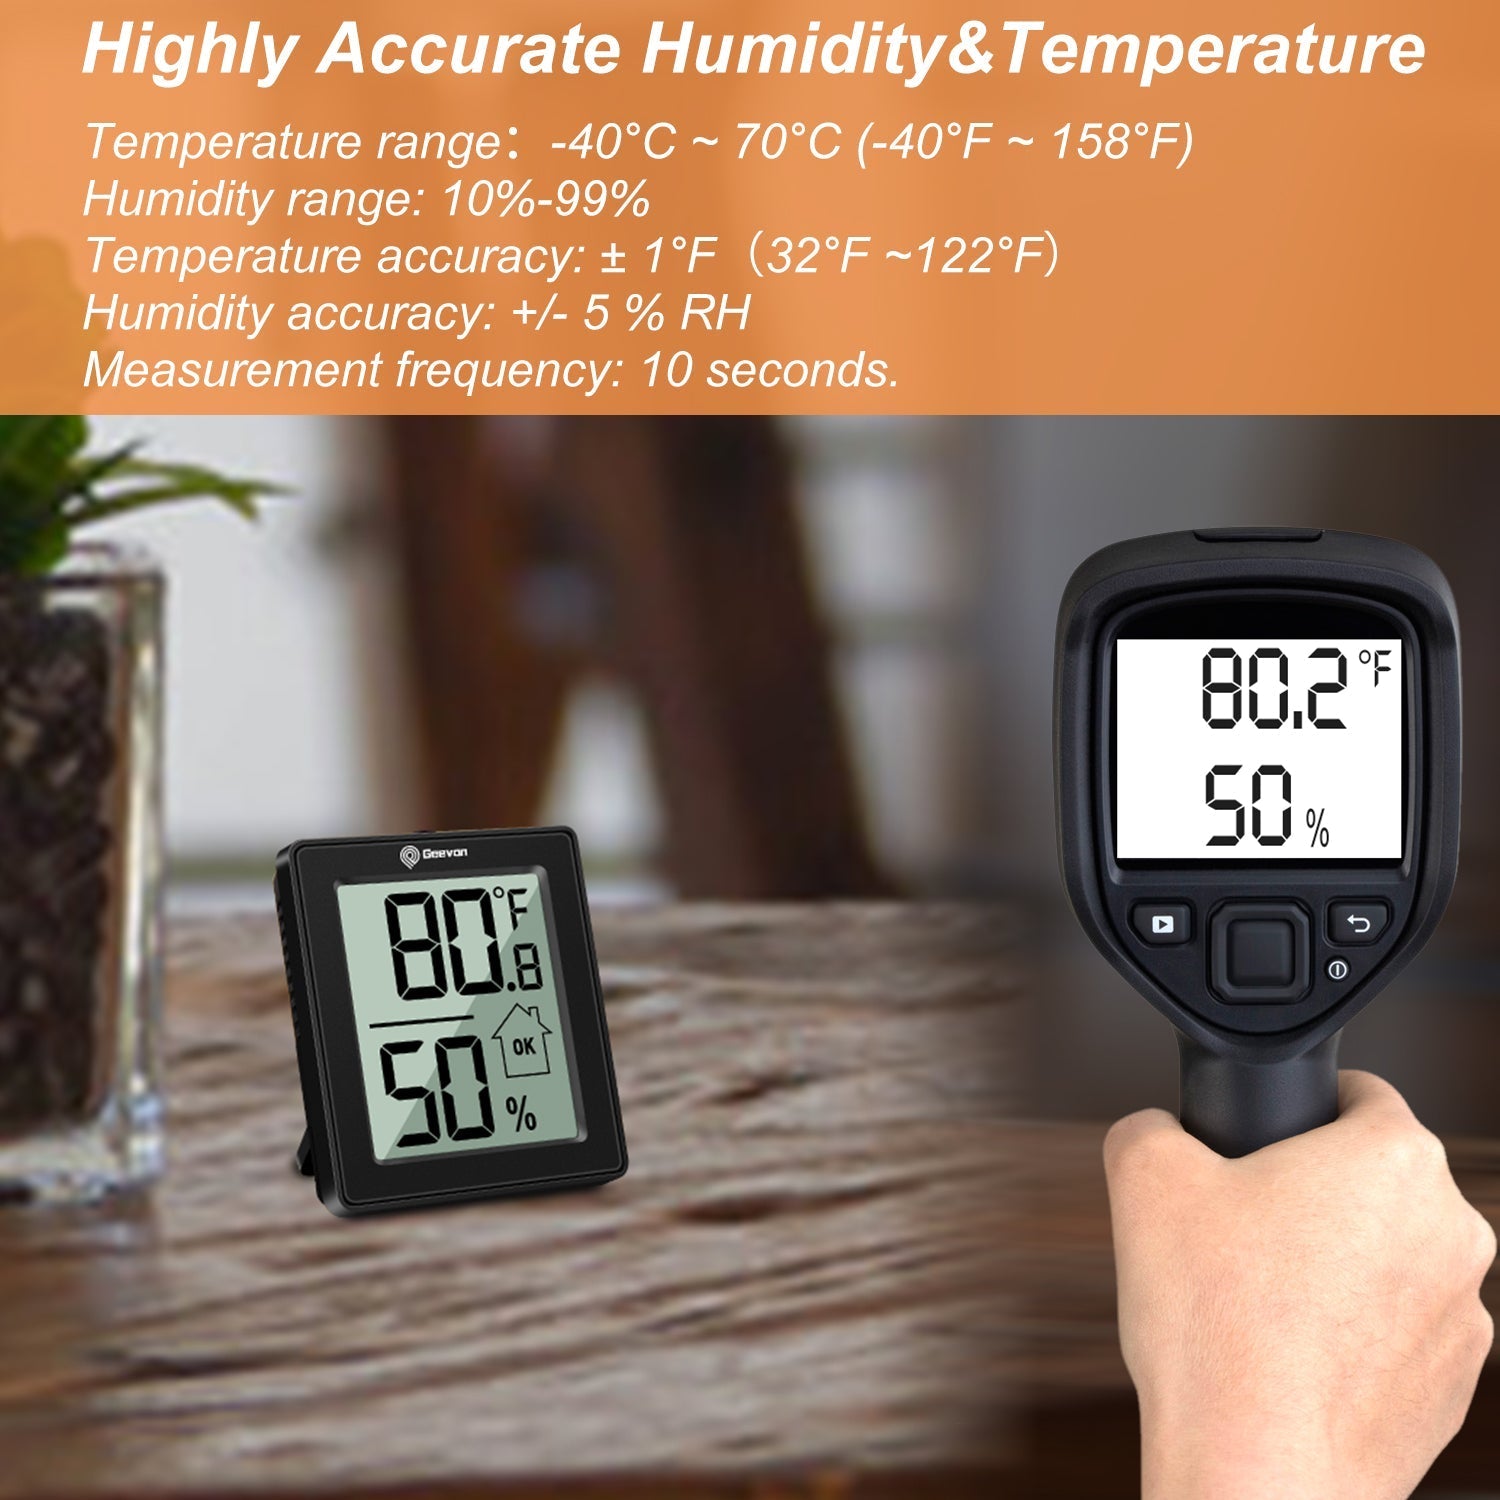 Geevon Hygrometer Indoor Thermometer Room Humidity Gauge with